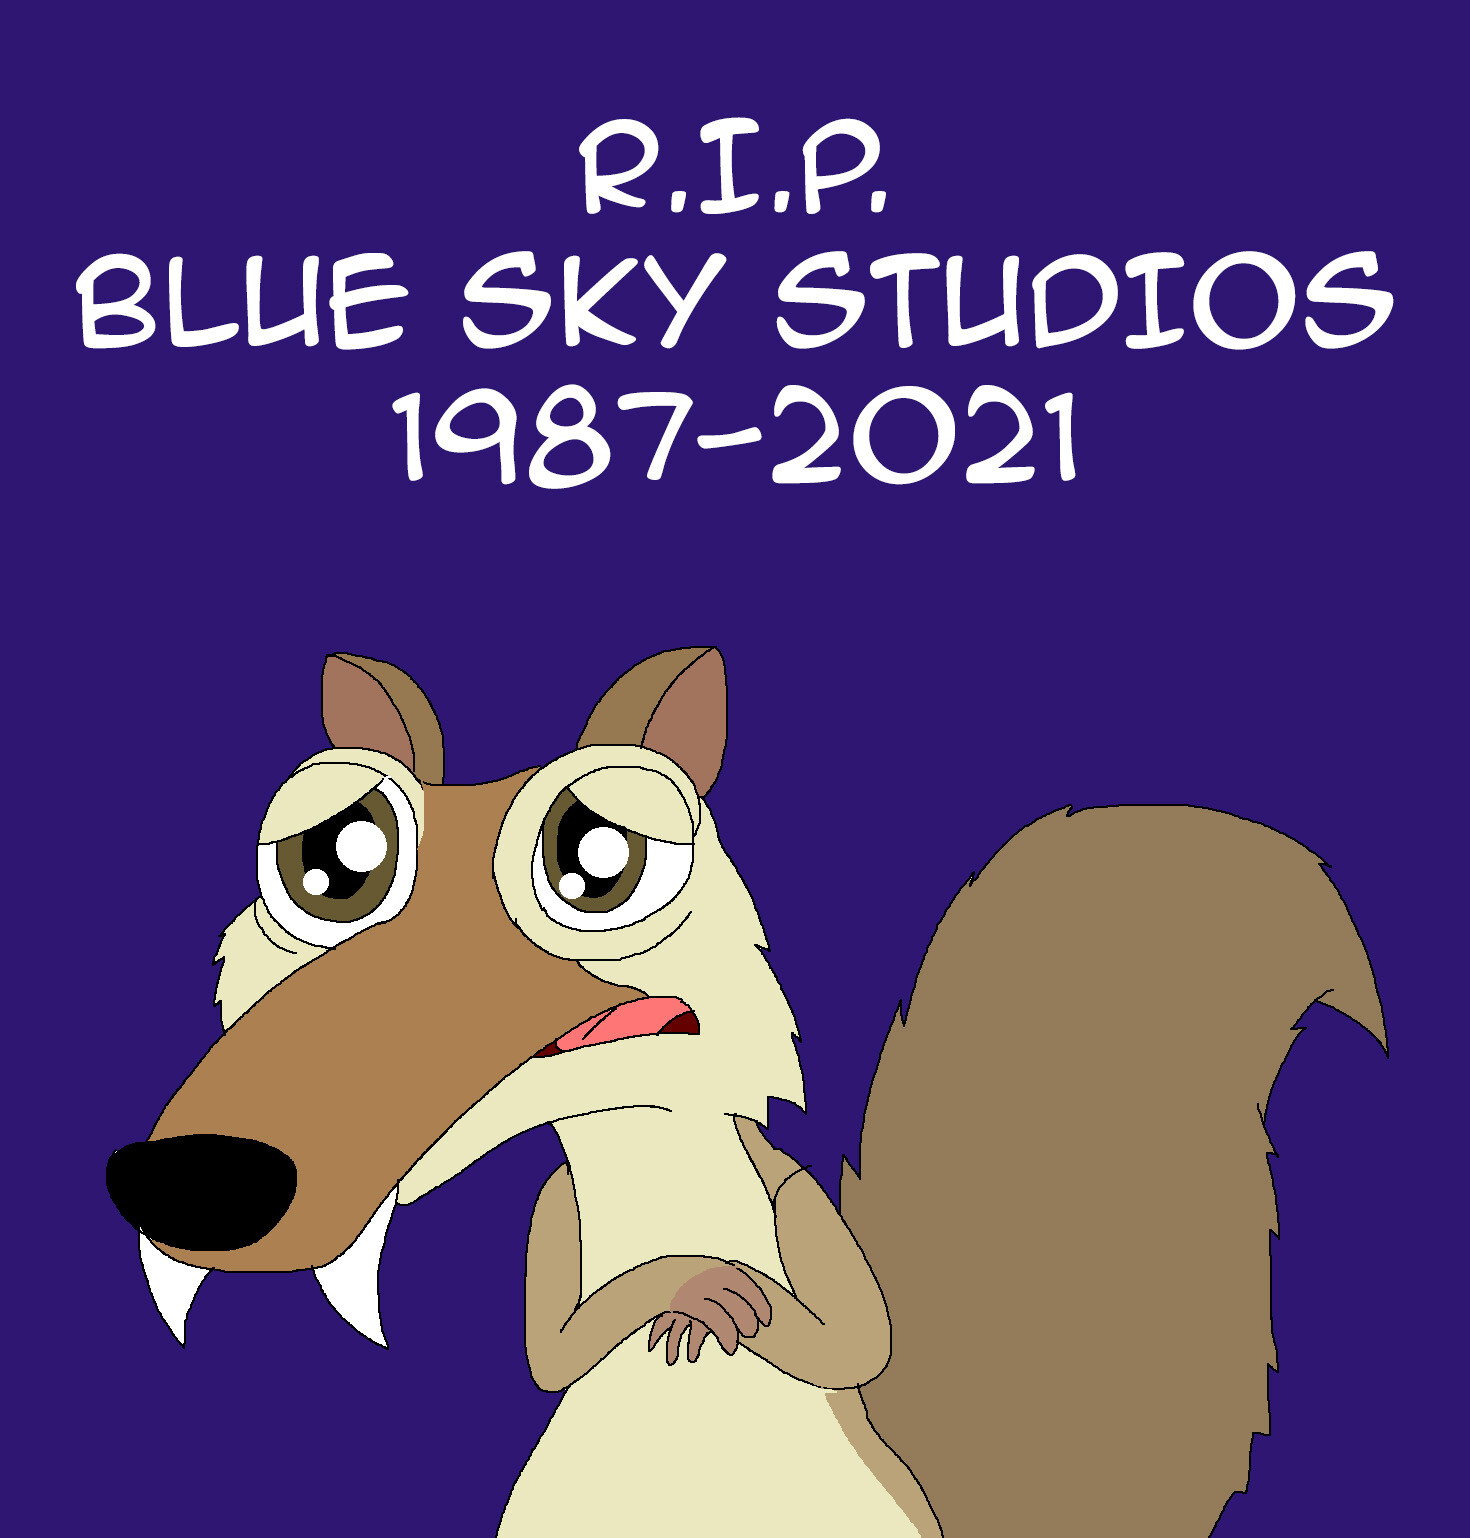 Hiro Hamada - Blue Sky Studios is No More